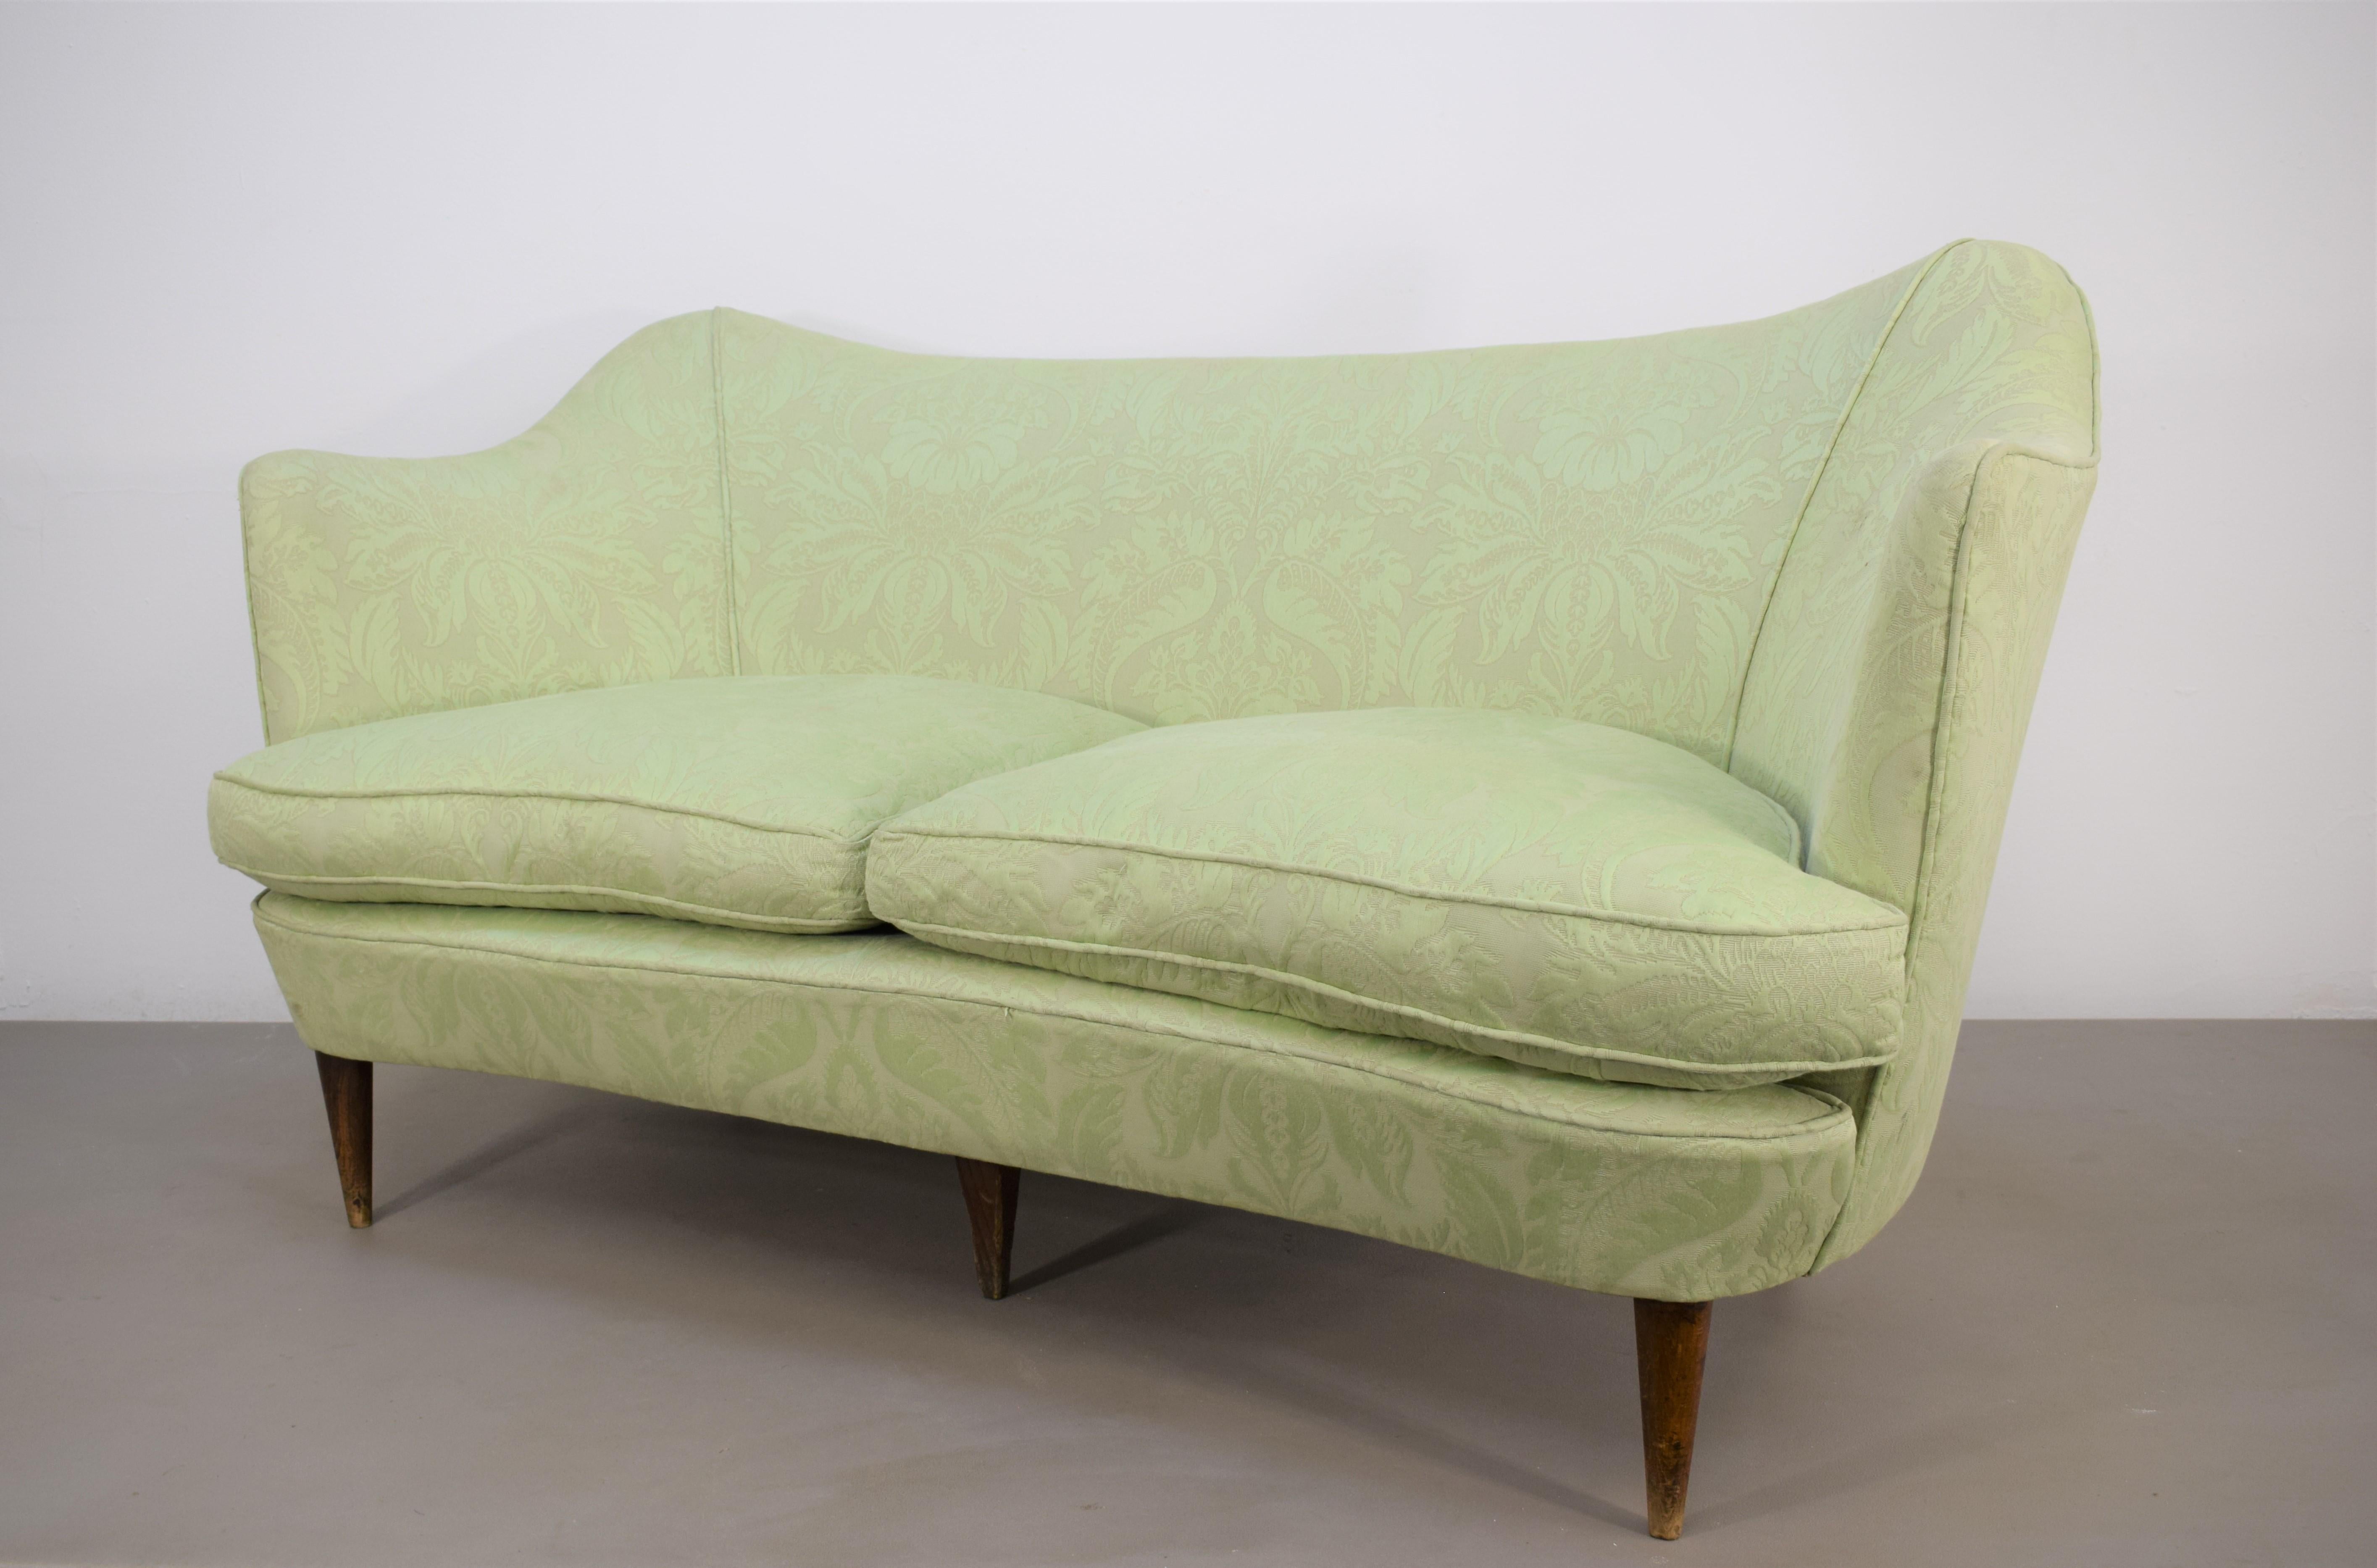 Italian sofa by Casa e Giardino, 1950s.

Dimensions: H= 75 cm; W= 142 cm; D= 75 cm; H seat= 38 cm.